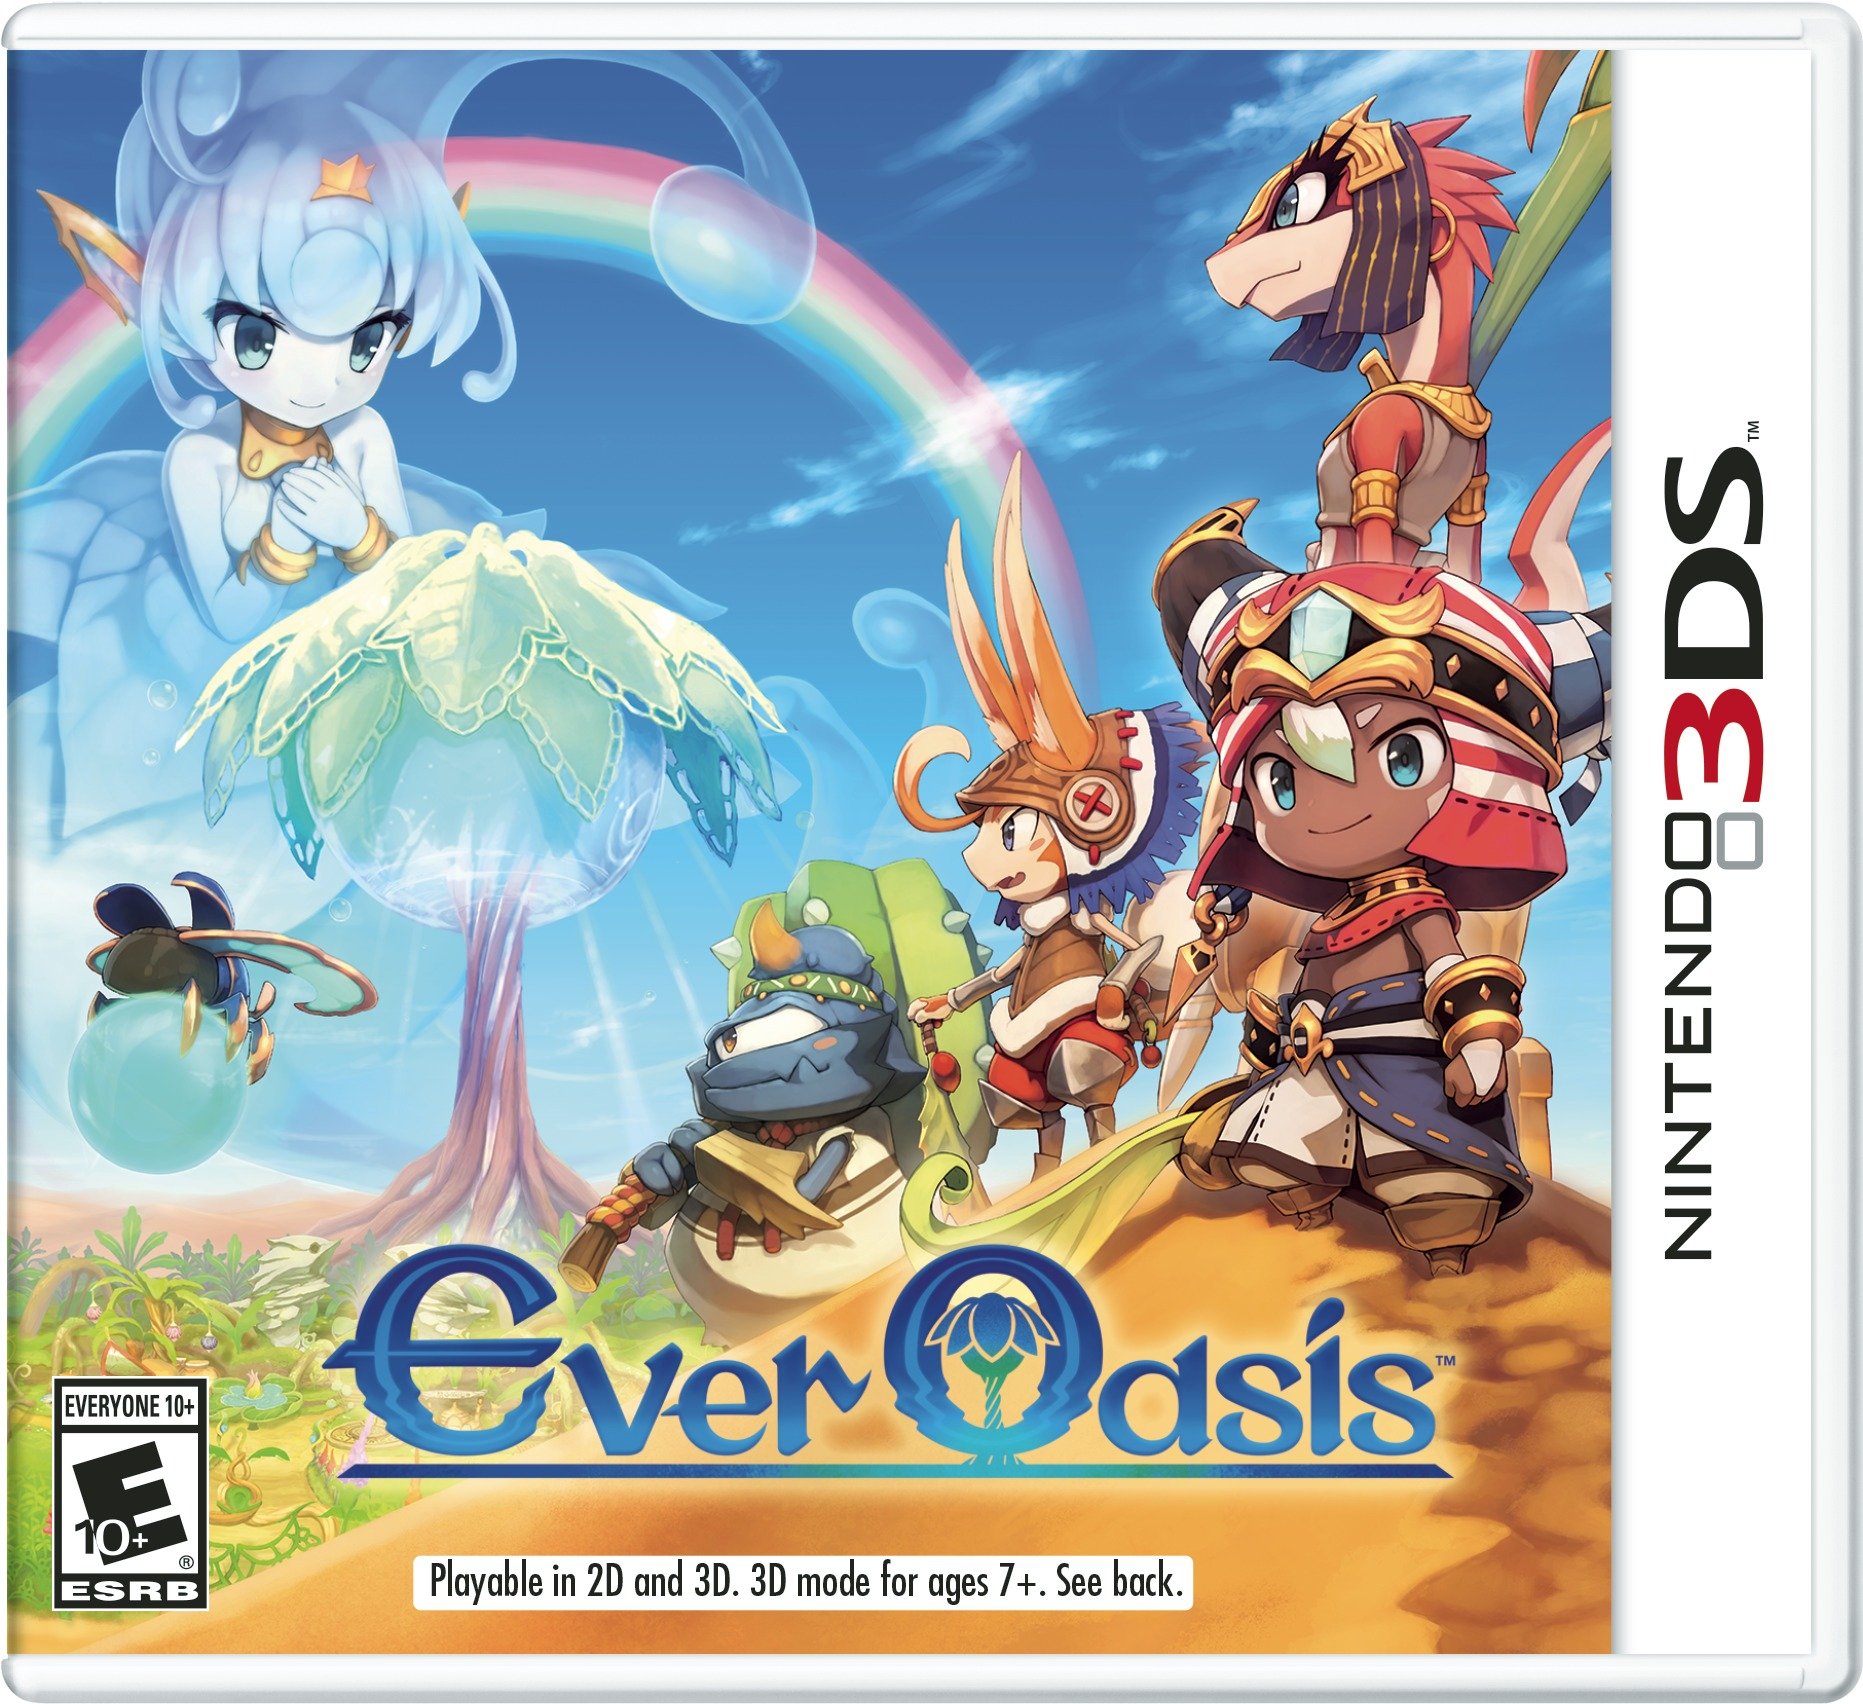 Ever Oasis - Nintendo 3DS